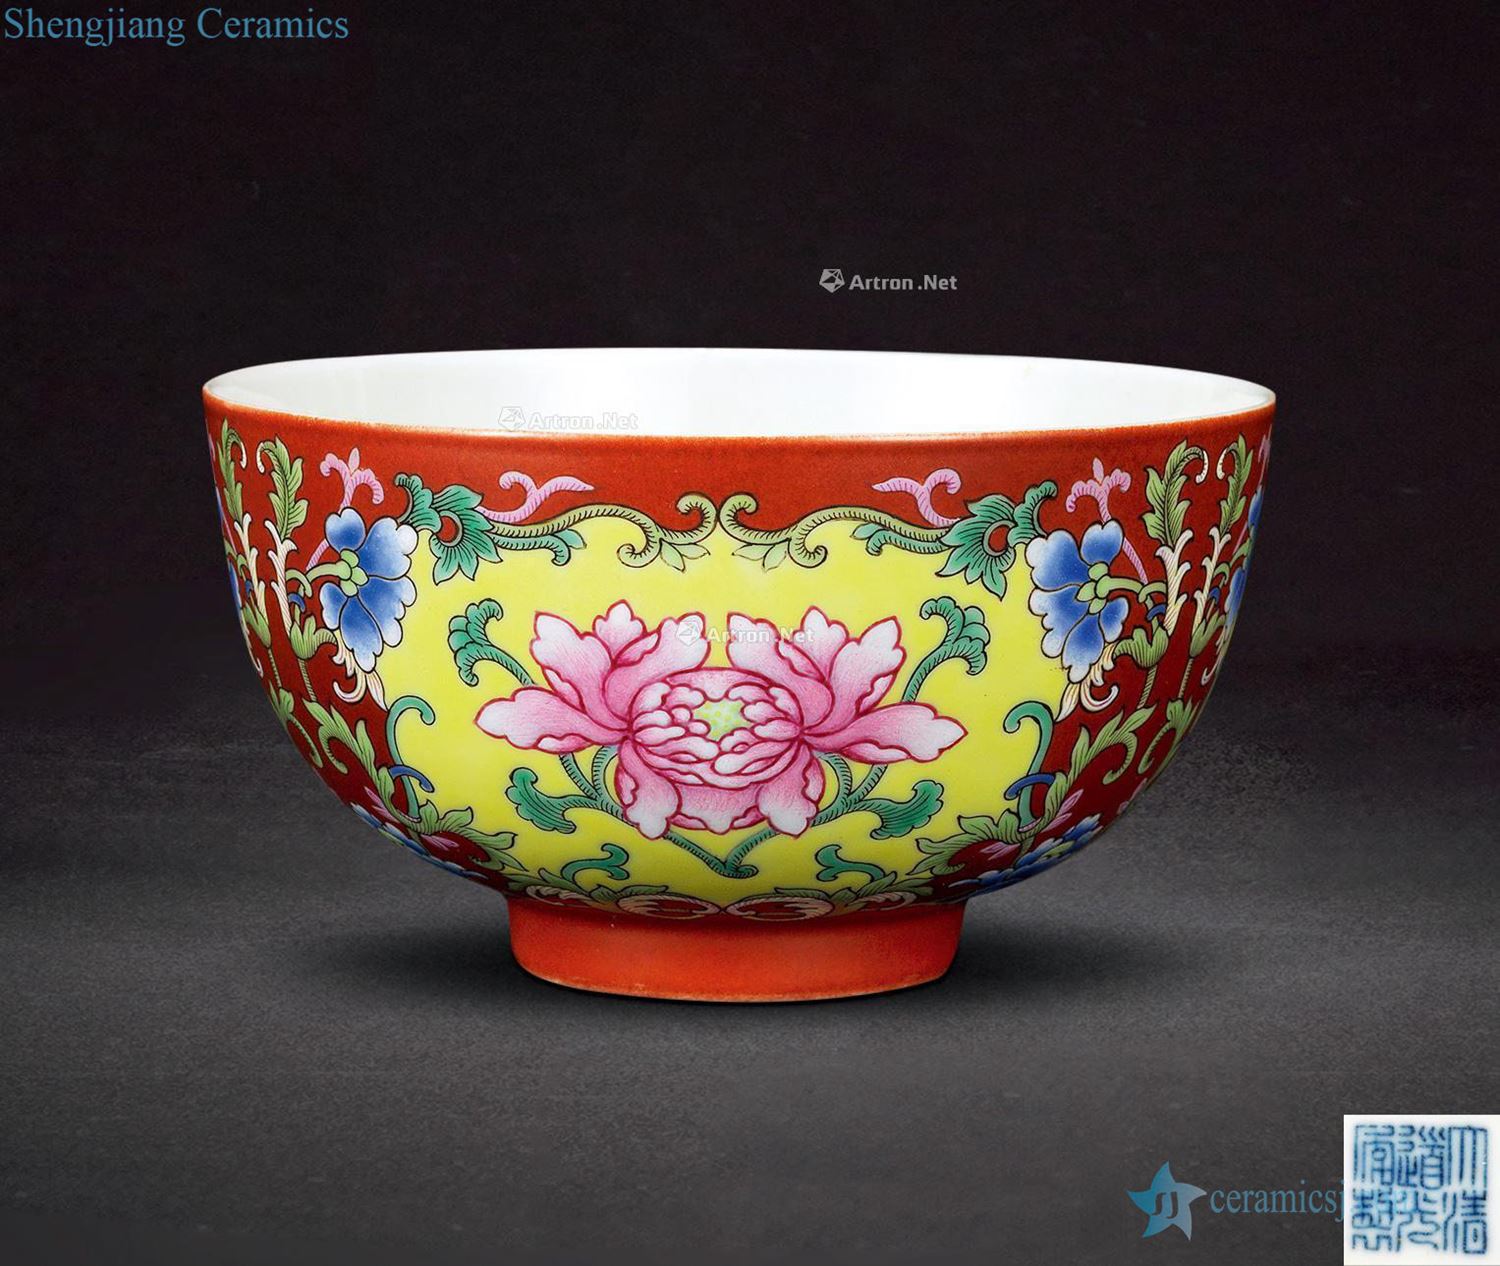 Qing daoguang coral famille rose medallion flowers green-splashed bowls